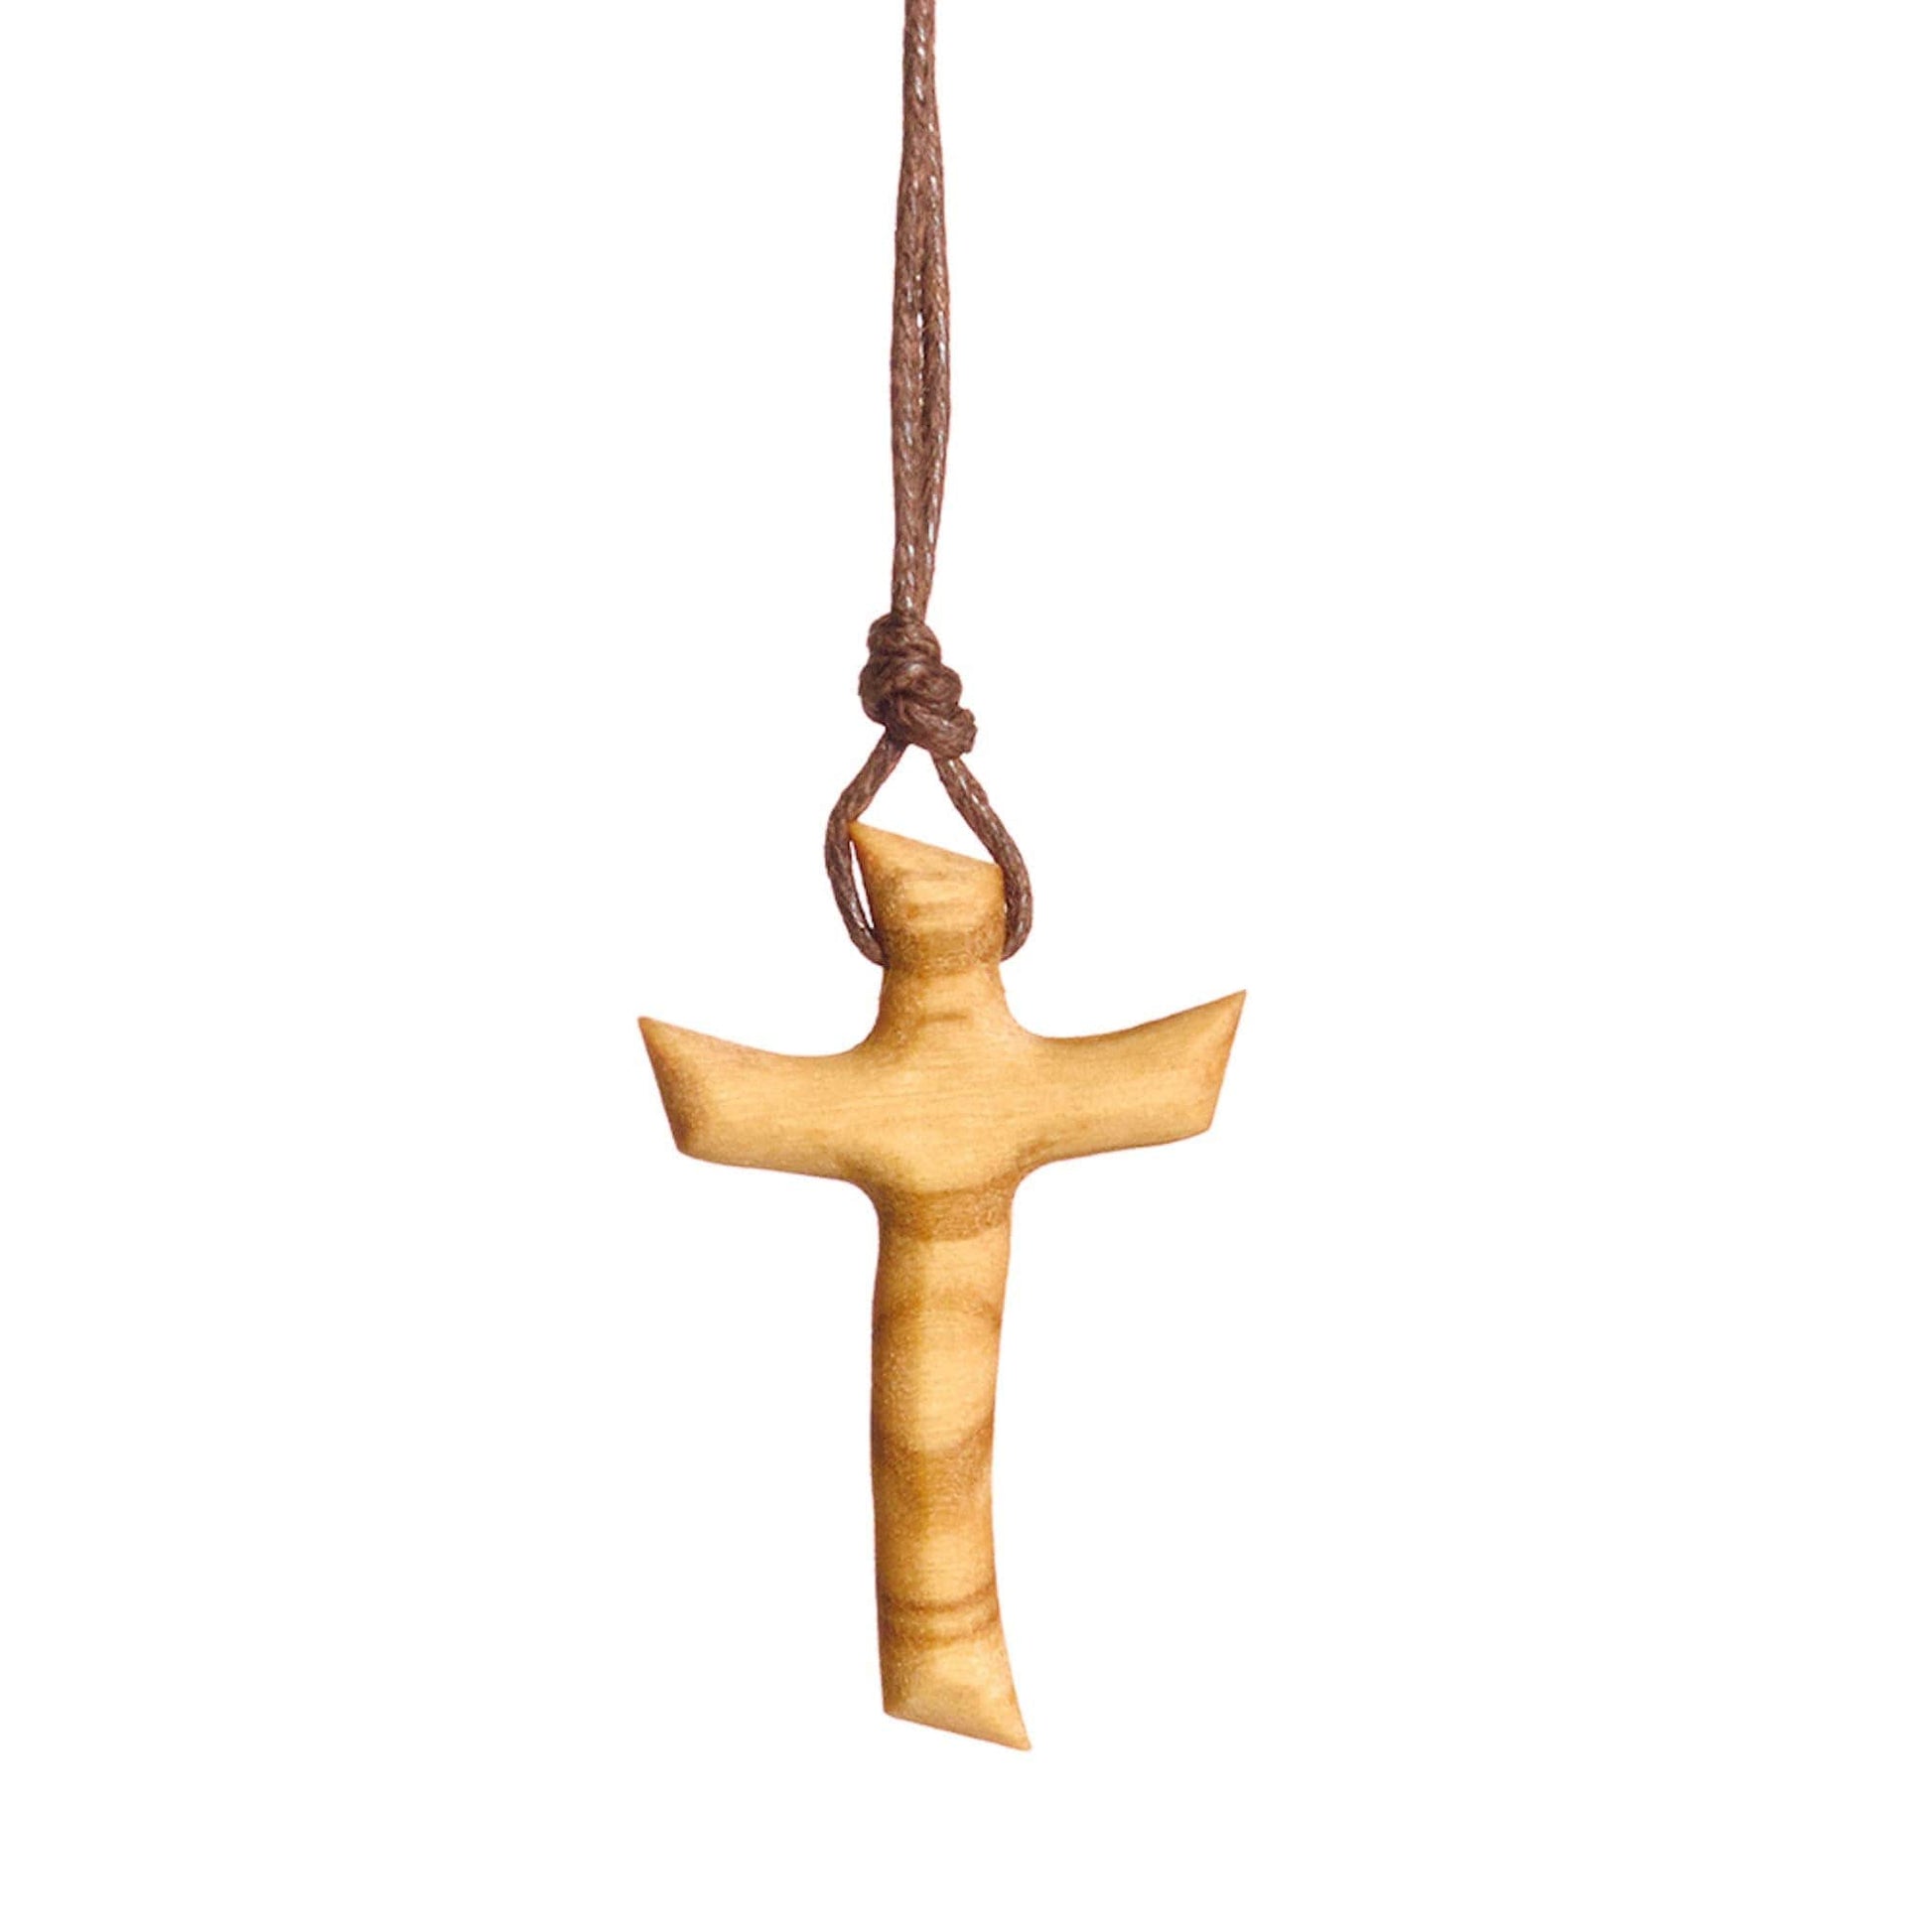 Olive Wood Cross Necklace - 2 Pendant